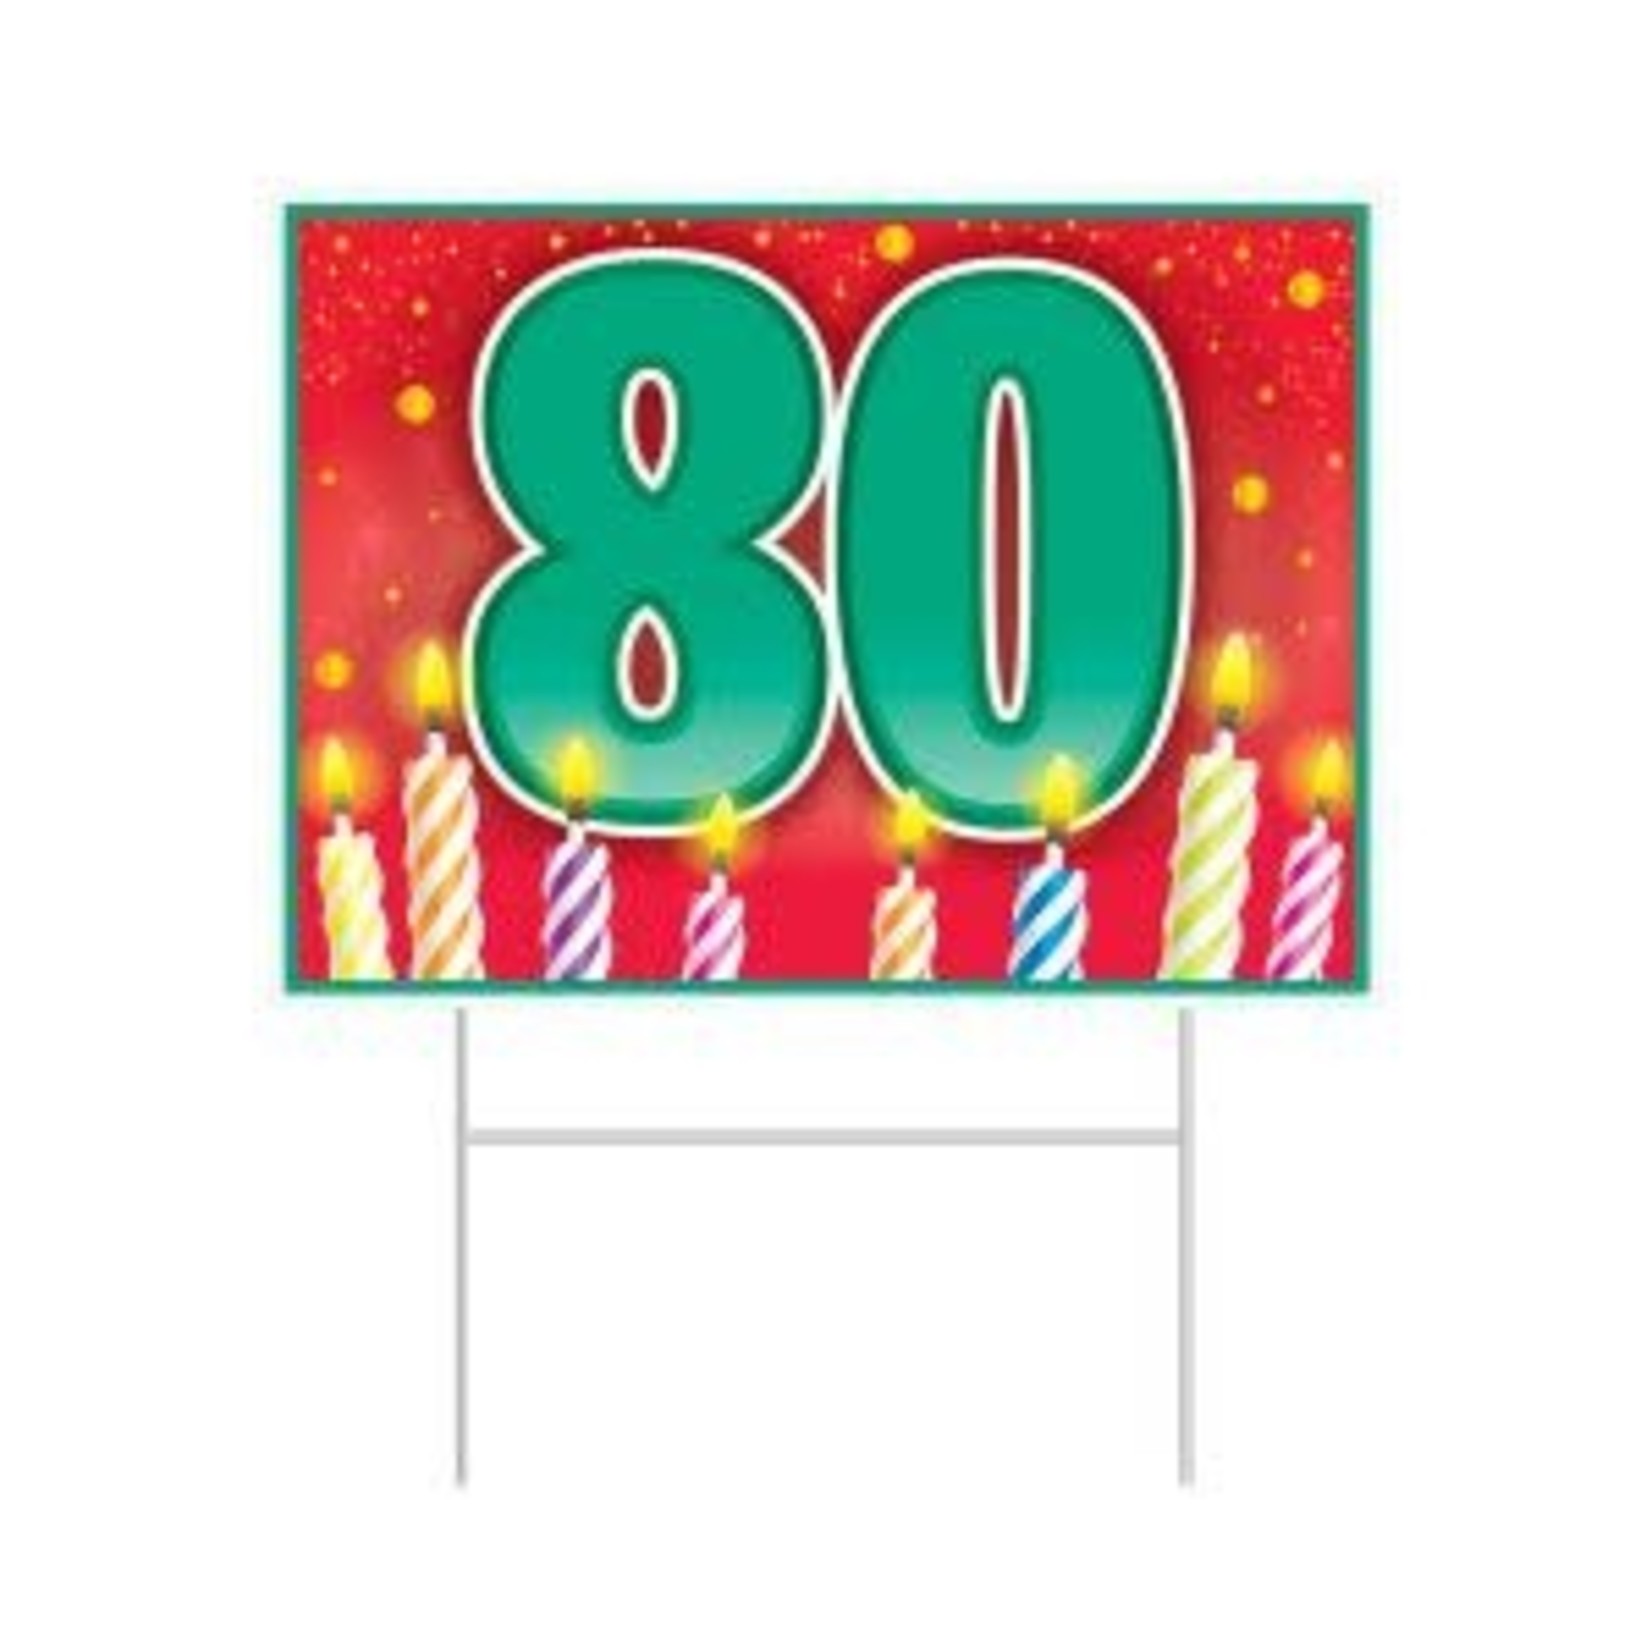 Beistle 80th Birthday Yard Sign - 11.5" x 15.5"